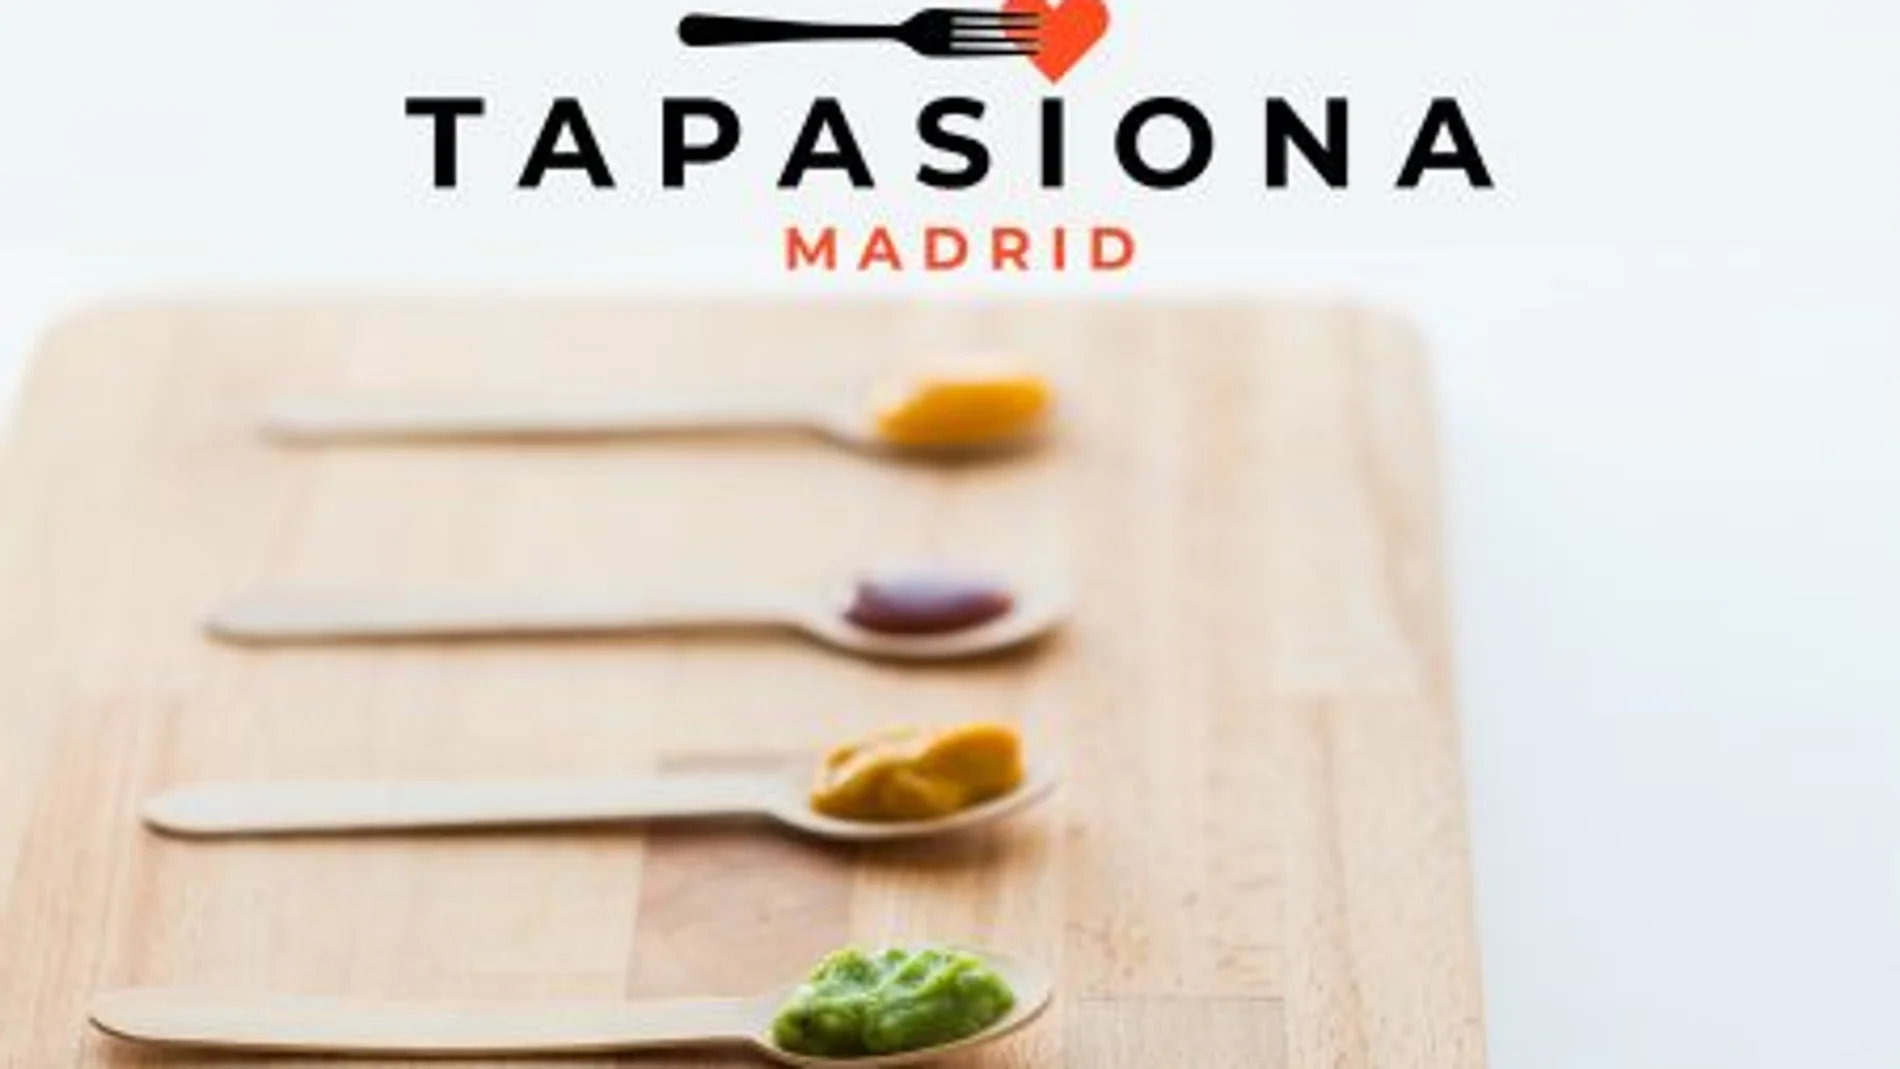 Tapasiona Madrid